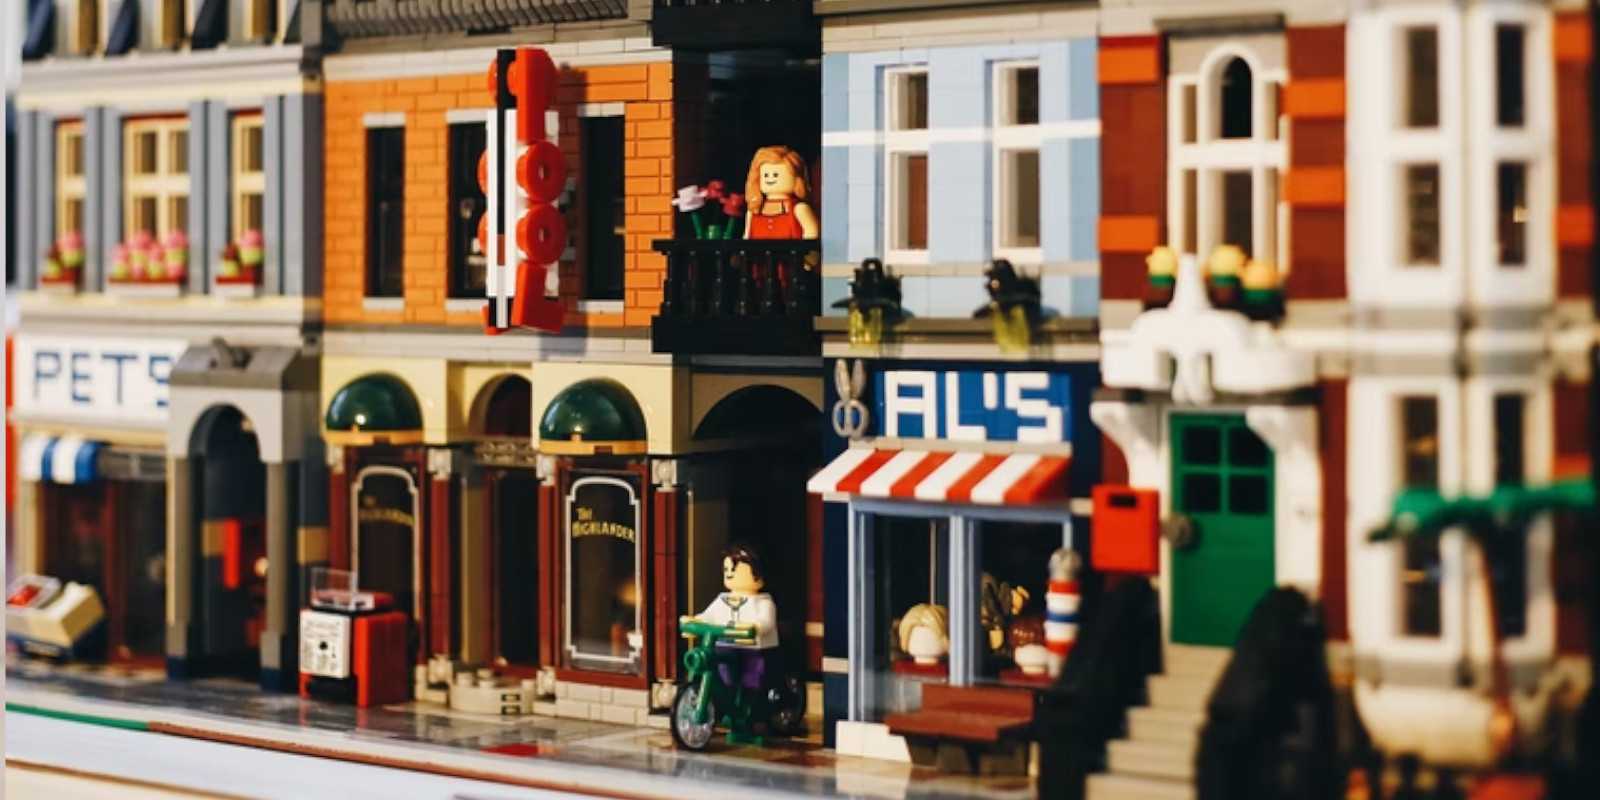 Lego Houses